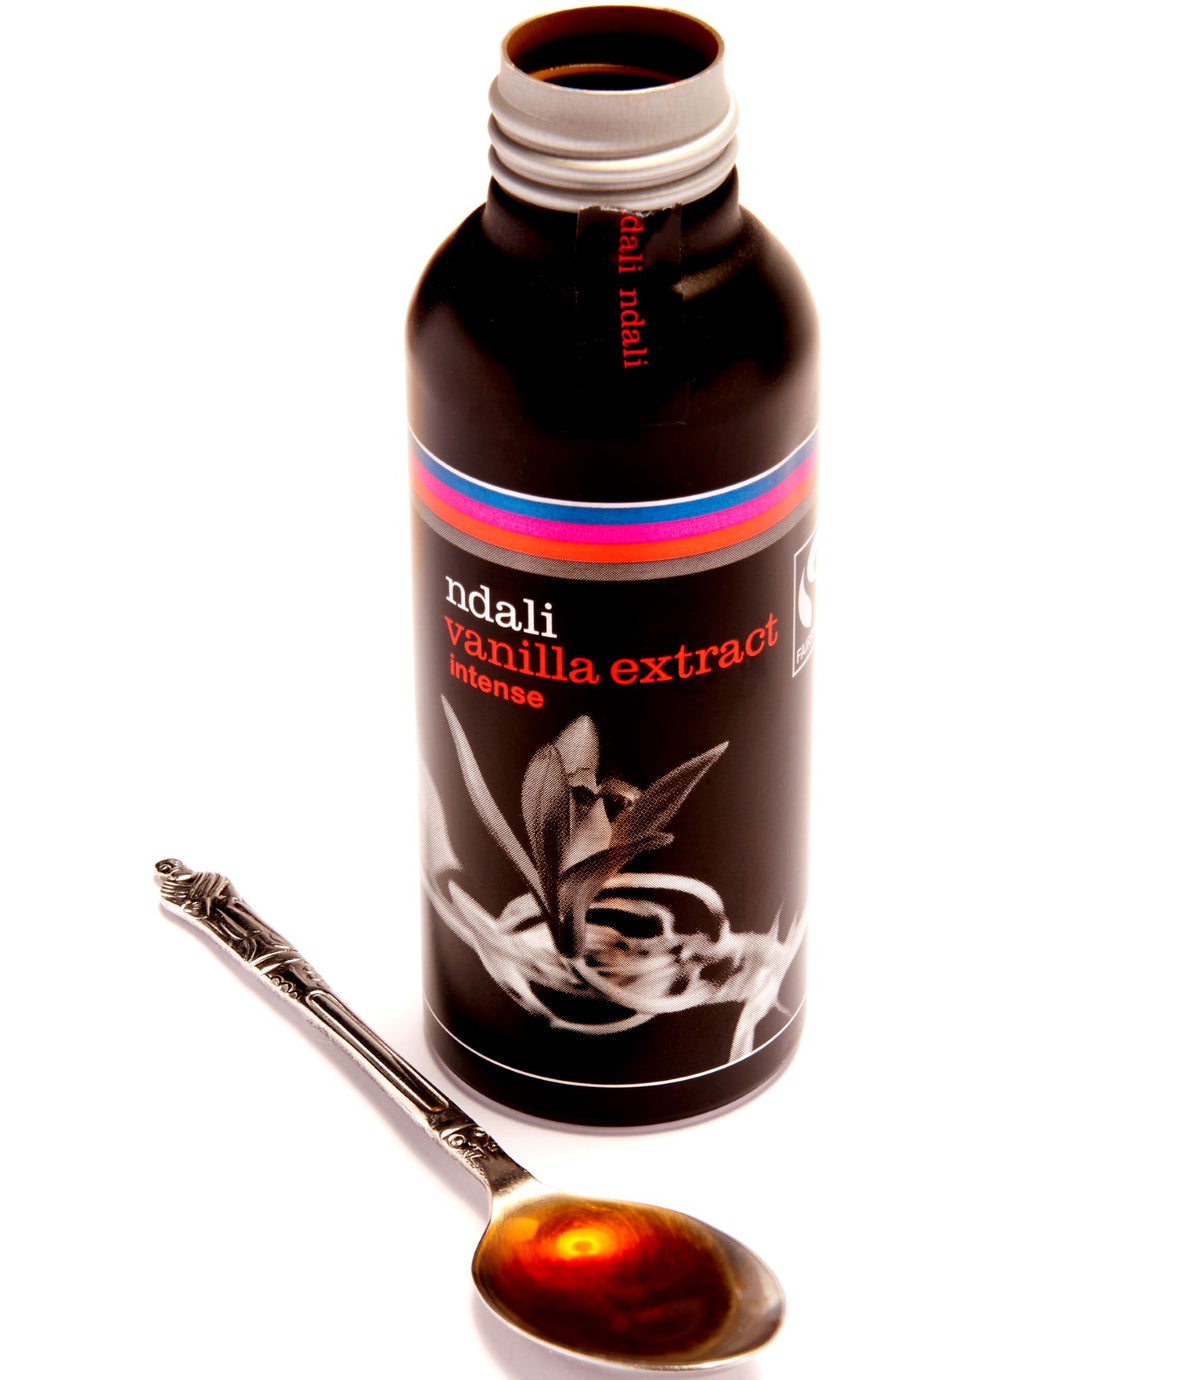 Ndali Vanilla Extract Intense - 100ml